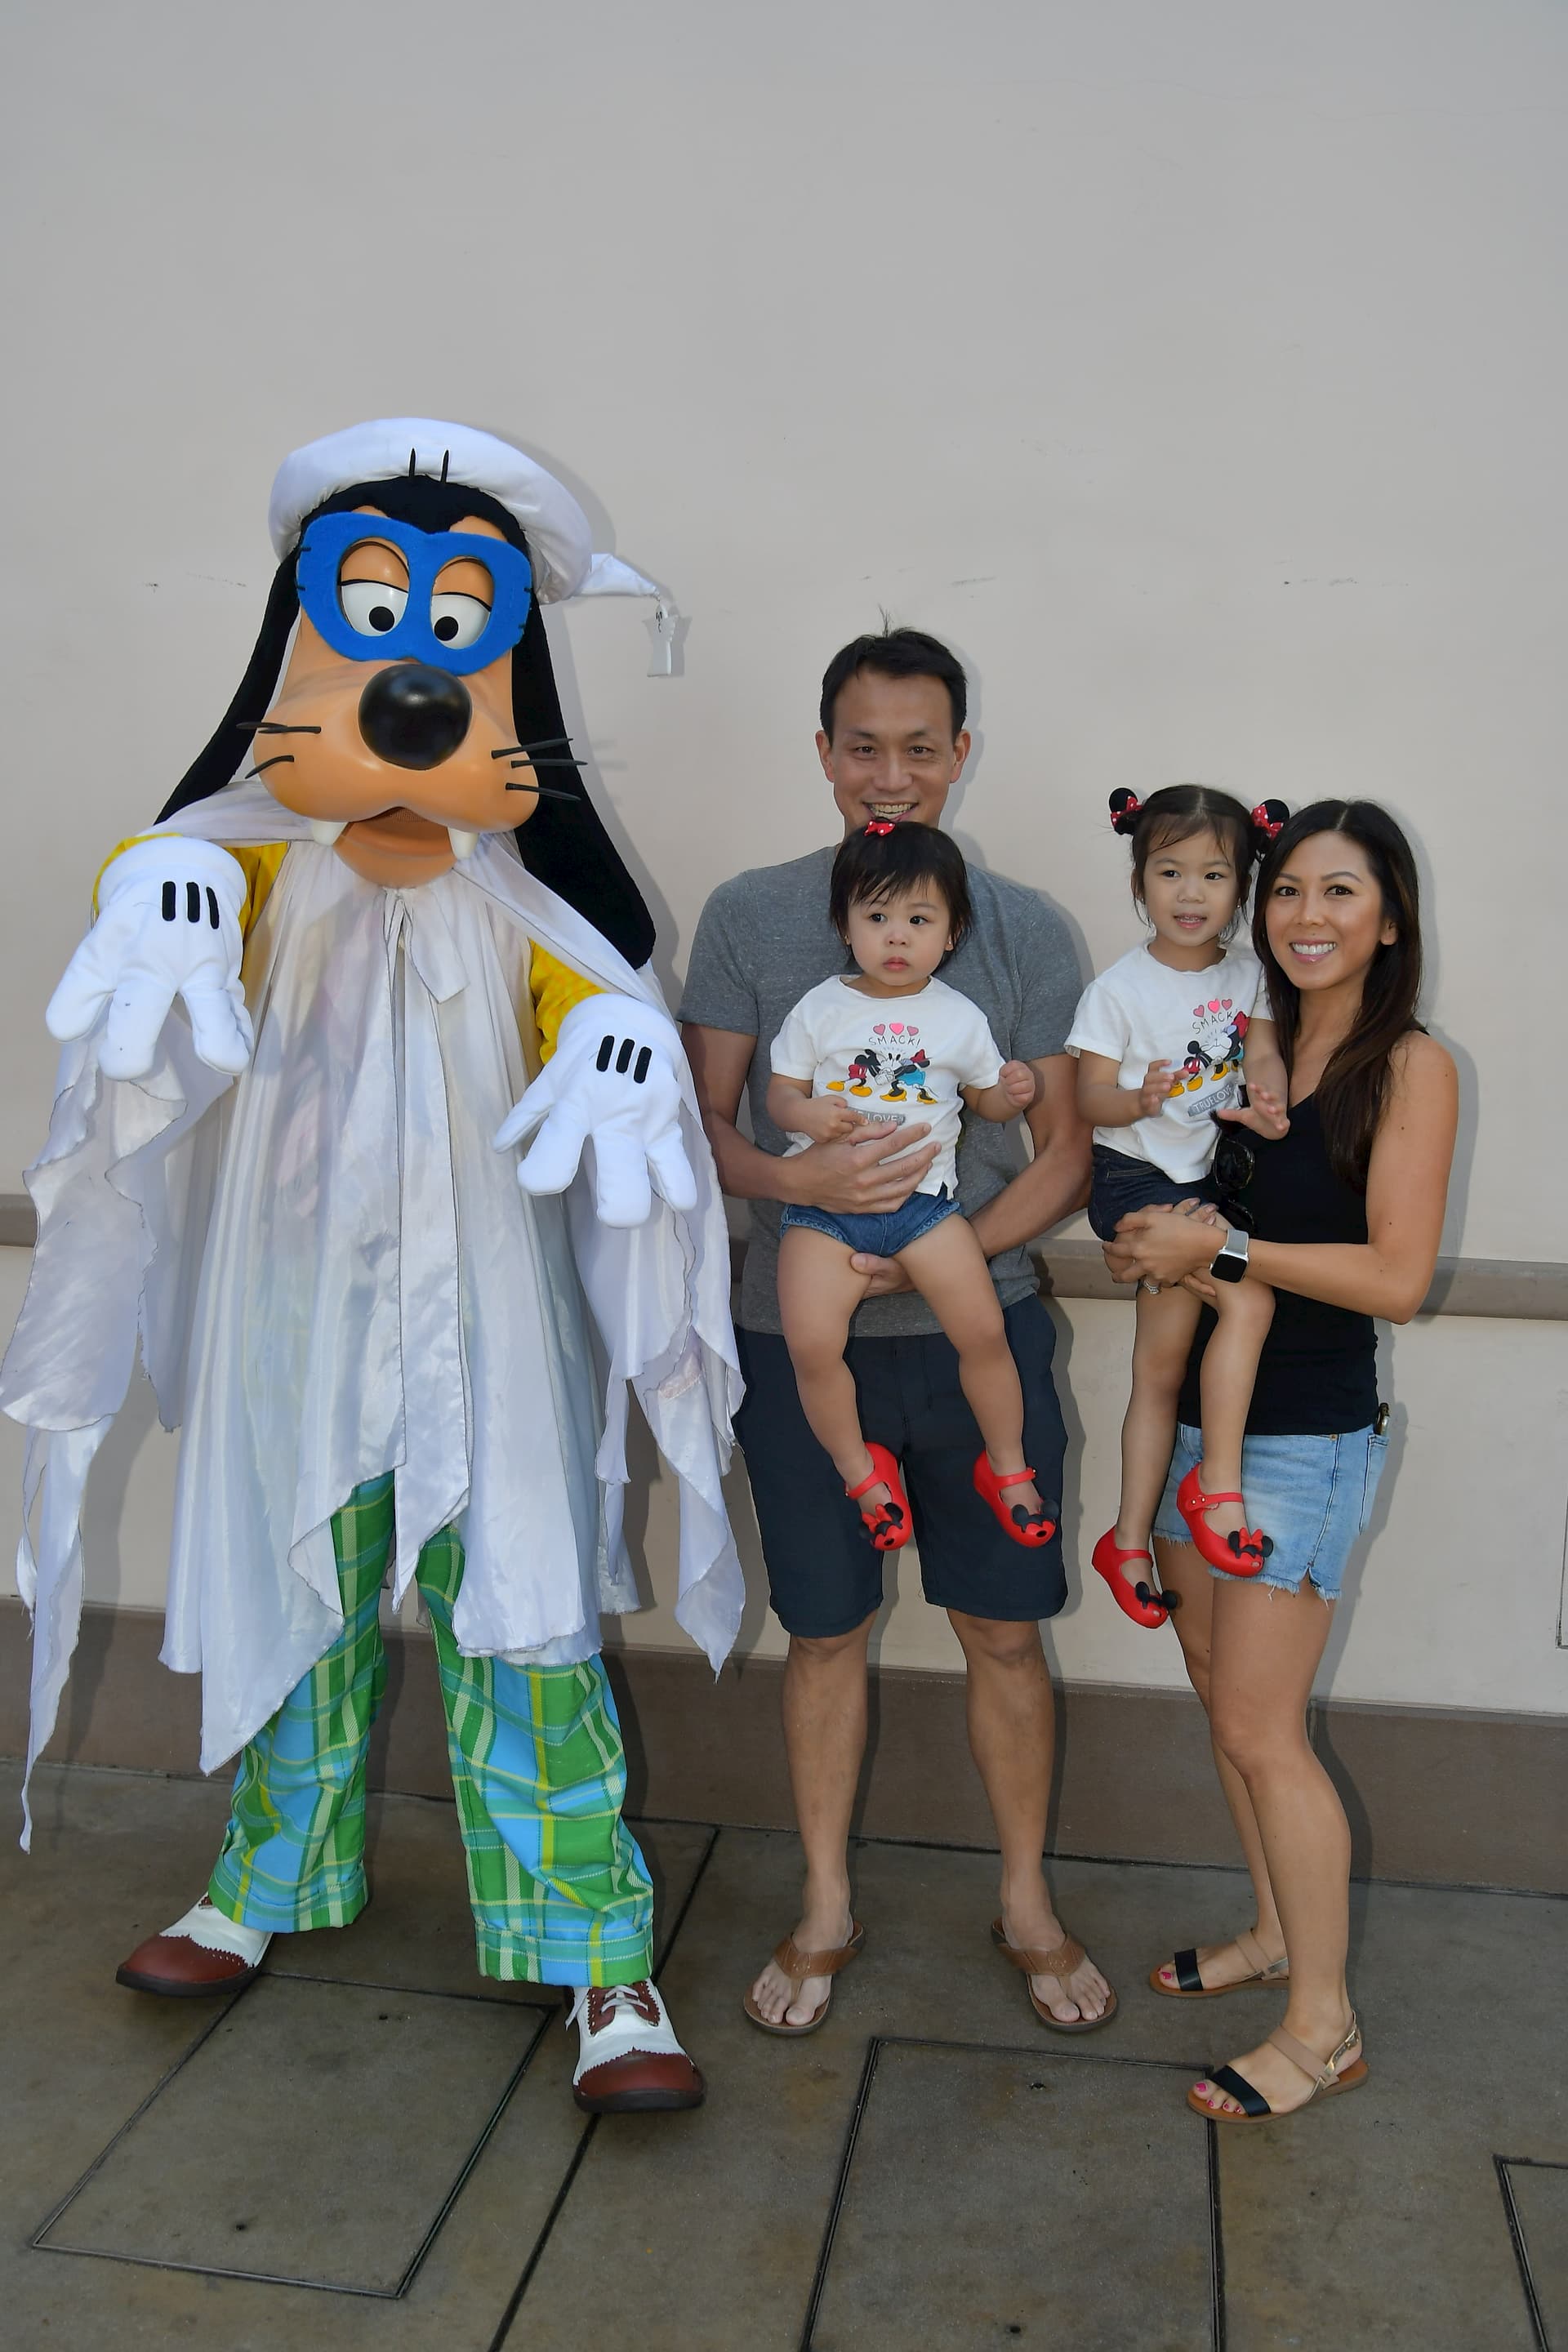 The Lin family at Disneyland